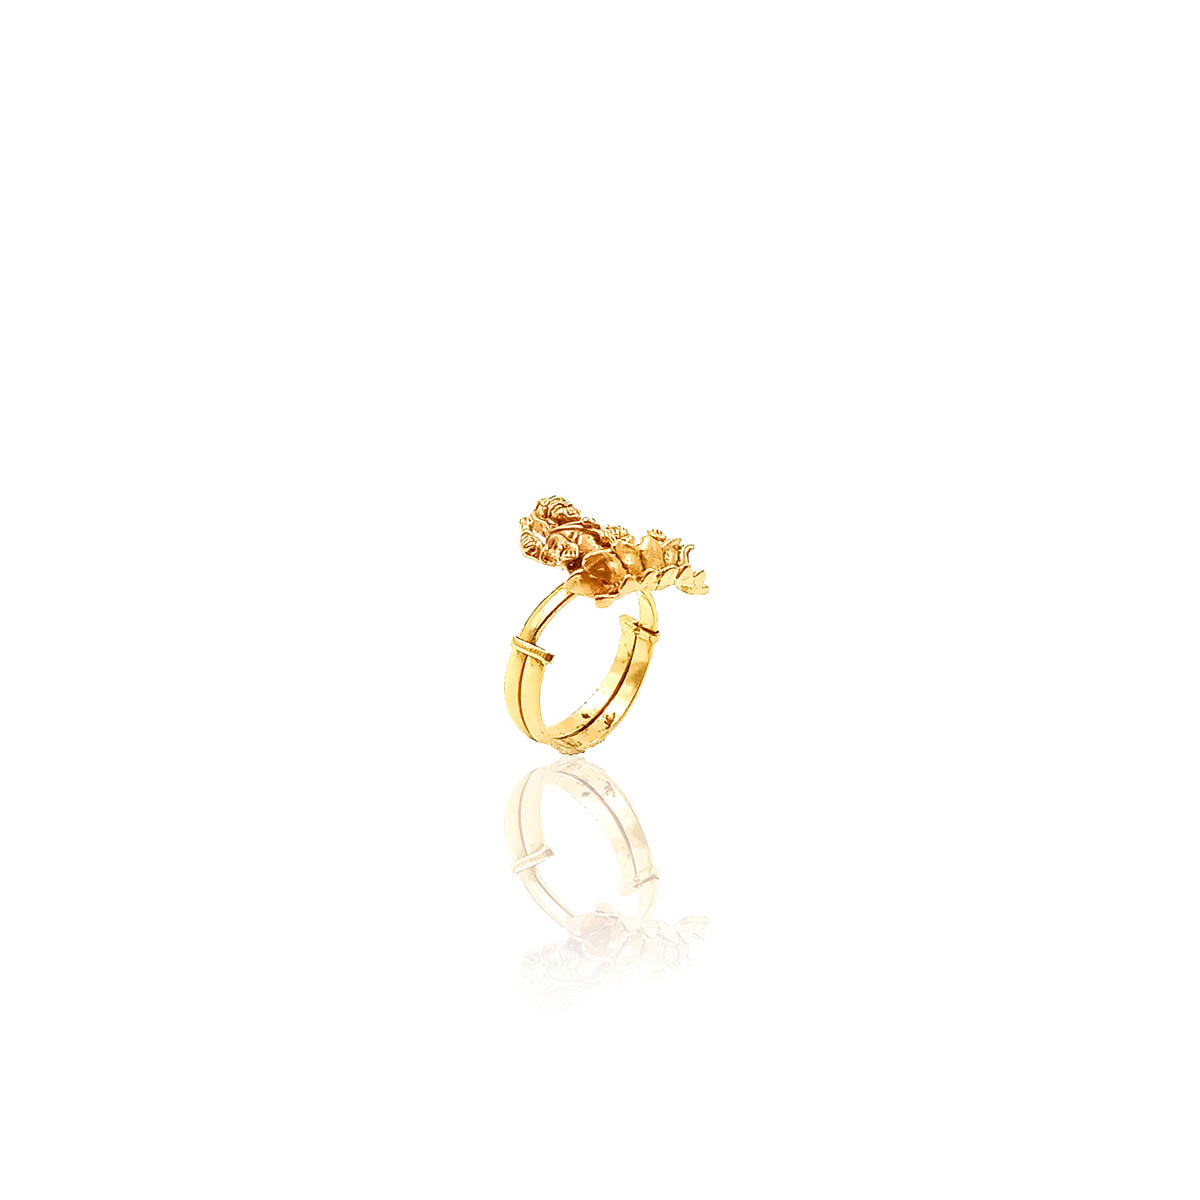 Net Gold Ring - Laxmi Narayan Jewels